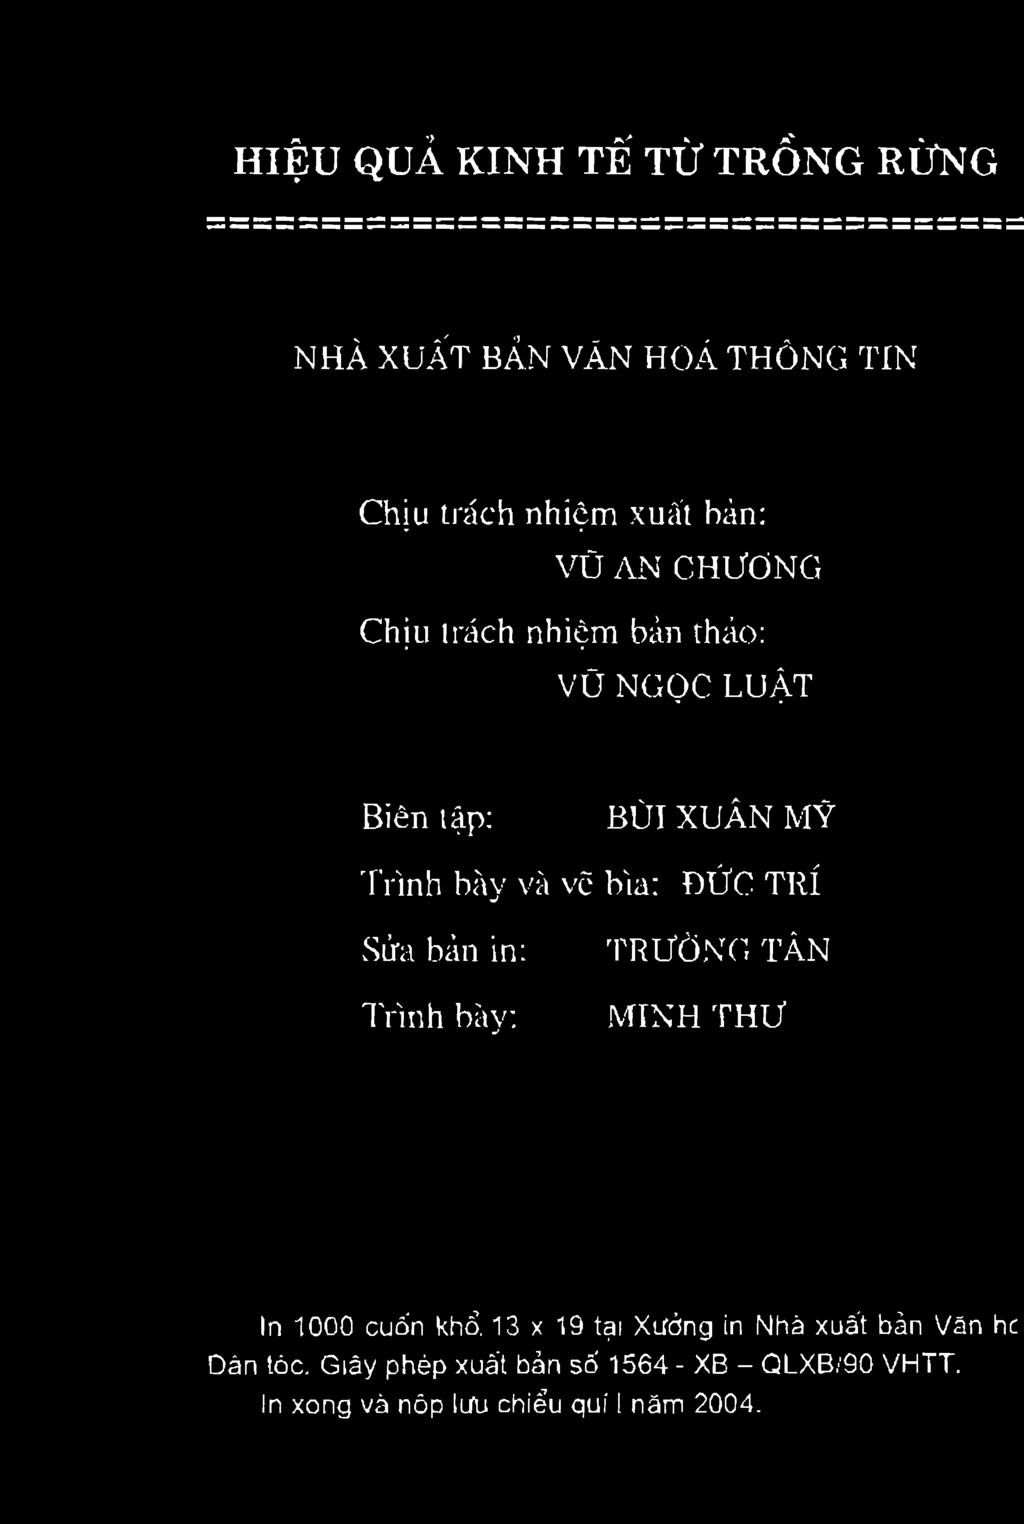 Sira ban in: TRU0.NO 1 An Tnnh bay: MINH THU In 1000 cuon kho.